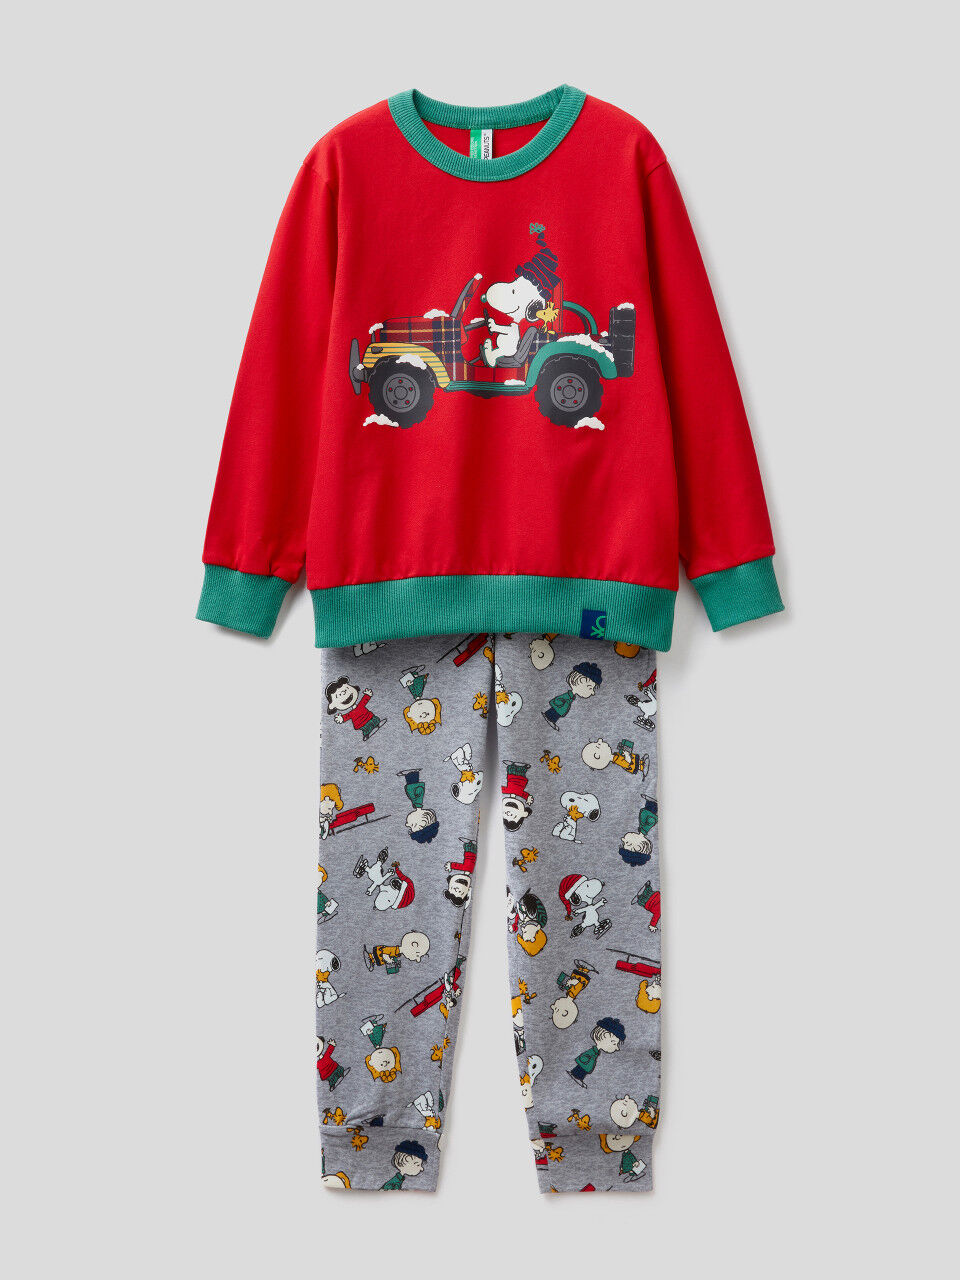 Pijama de Snoopy de algodón cálido